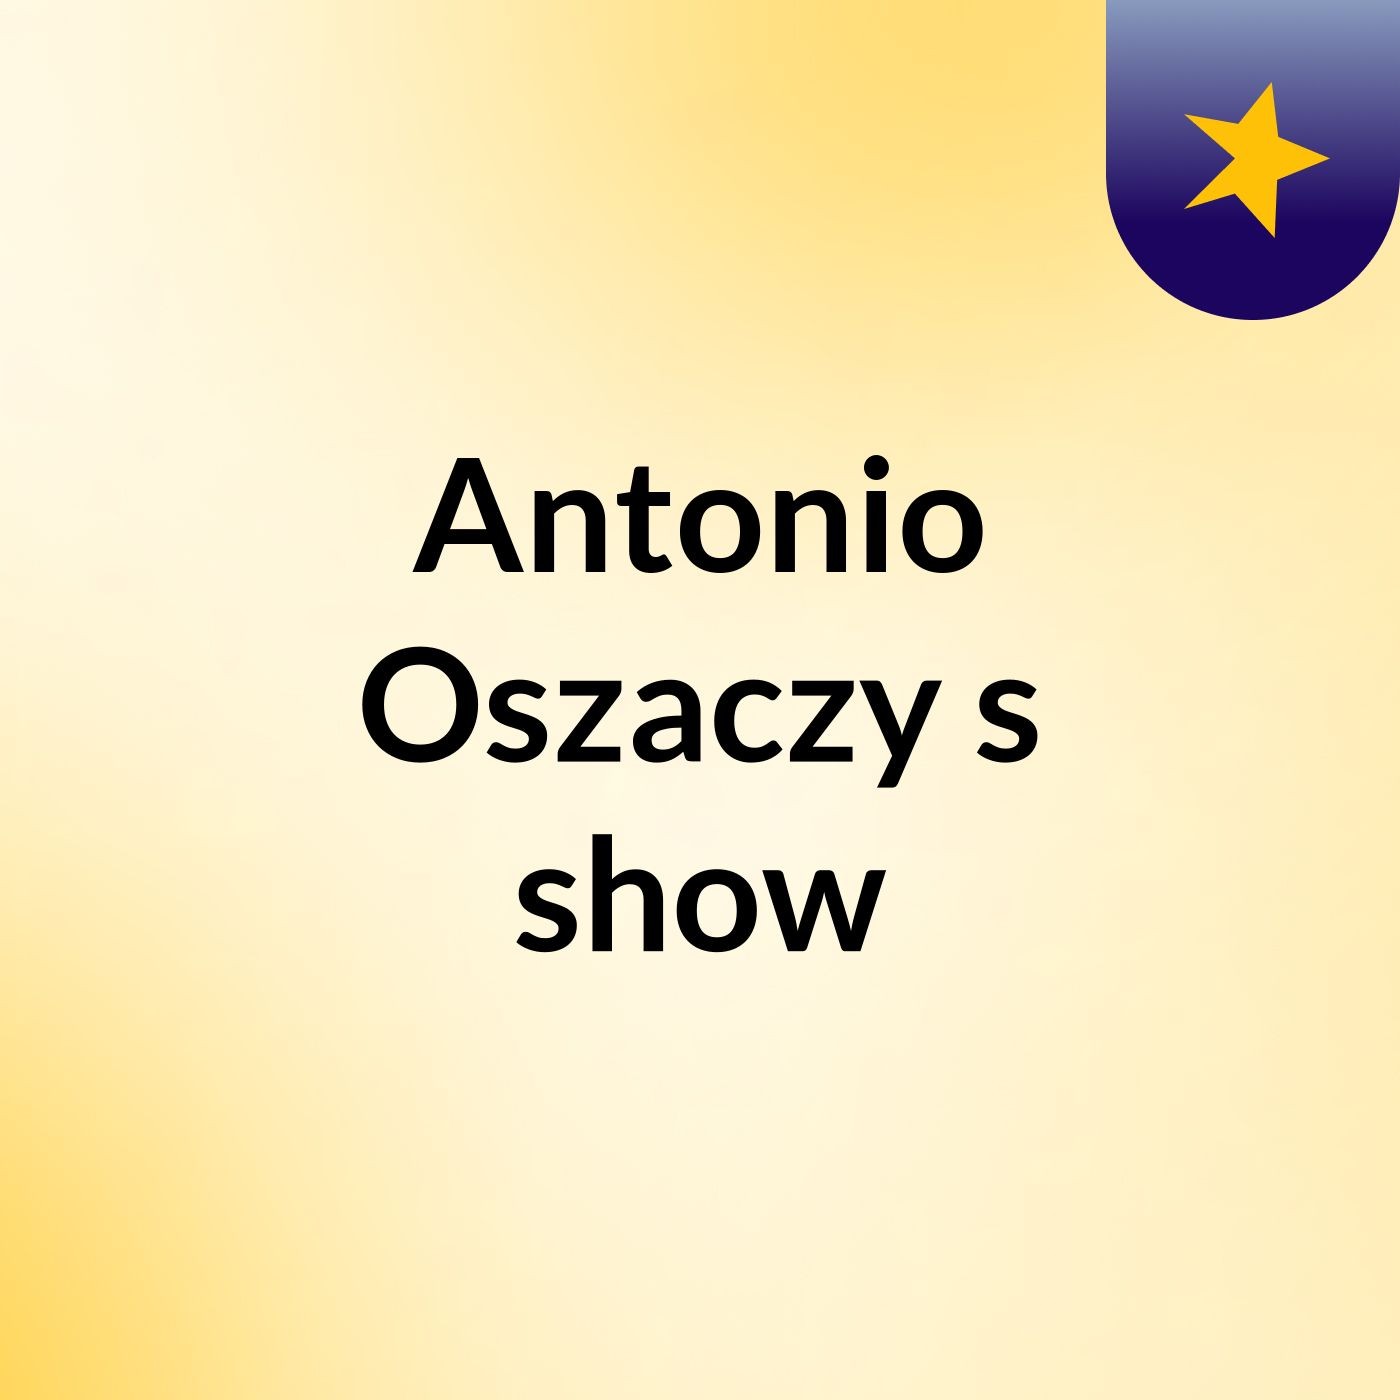 Antonio Oszaczy's show